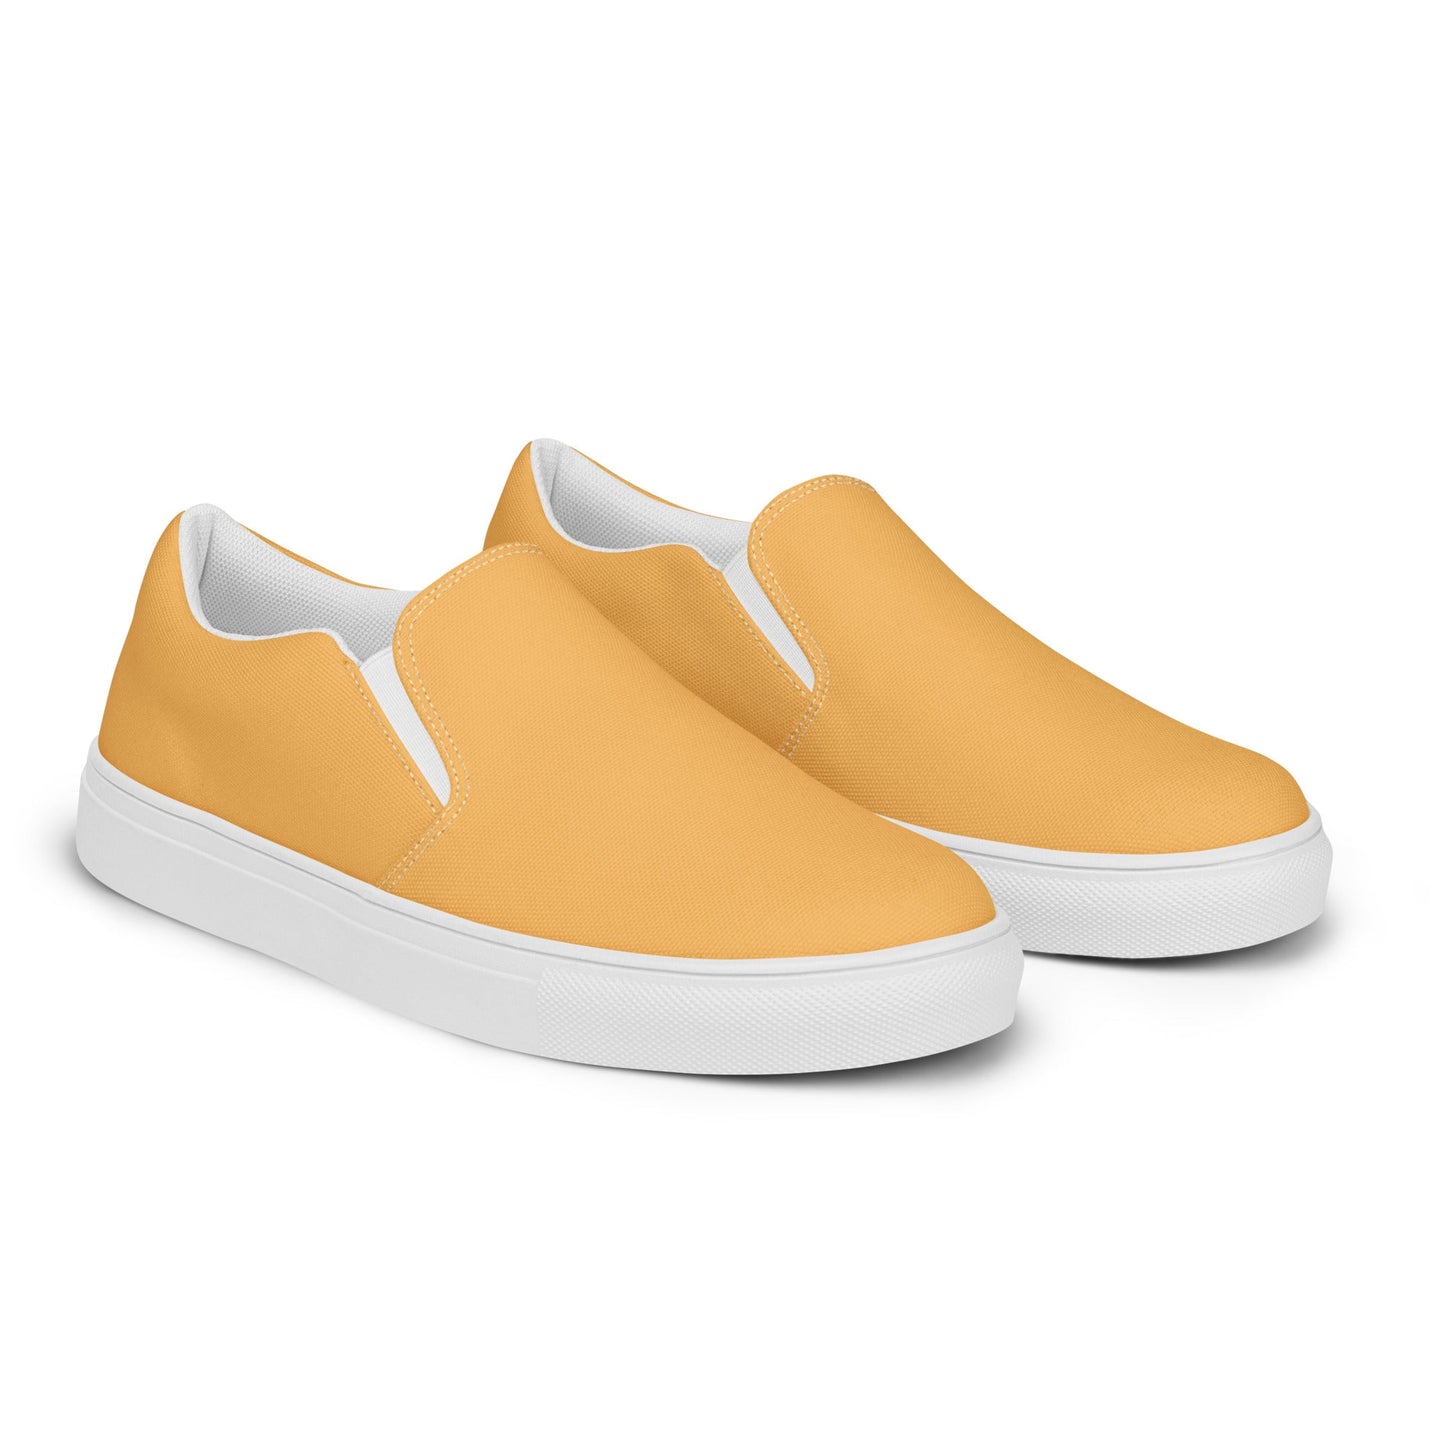 klasneakers Men’s slip-on canvas shoes - Light Orange